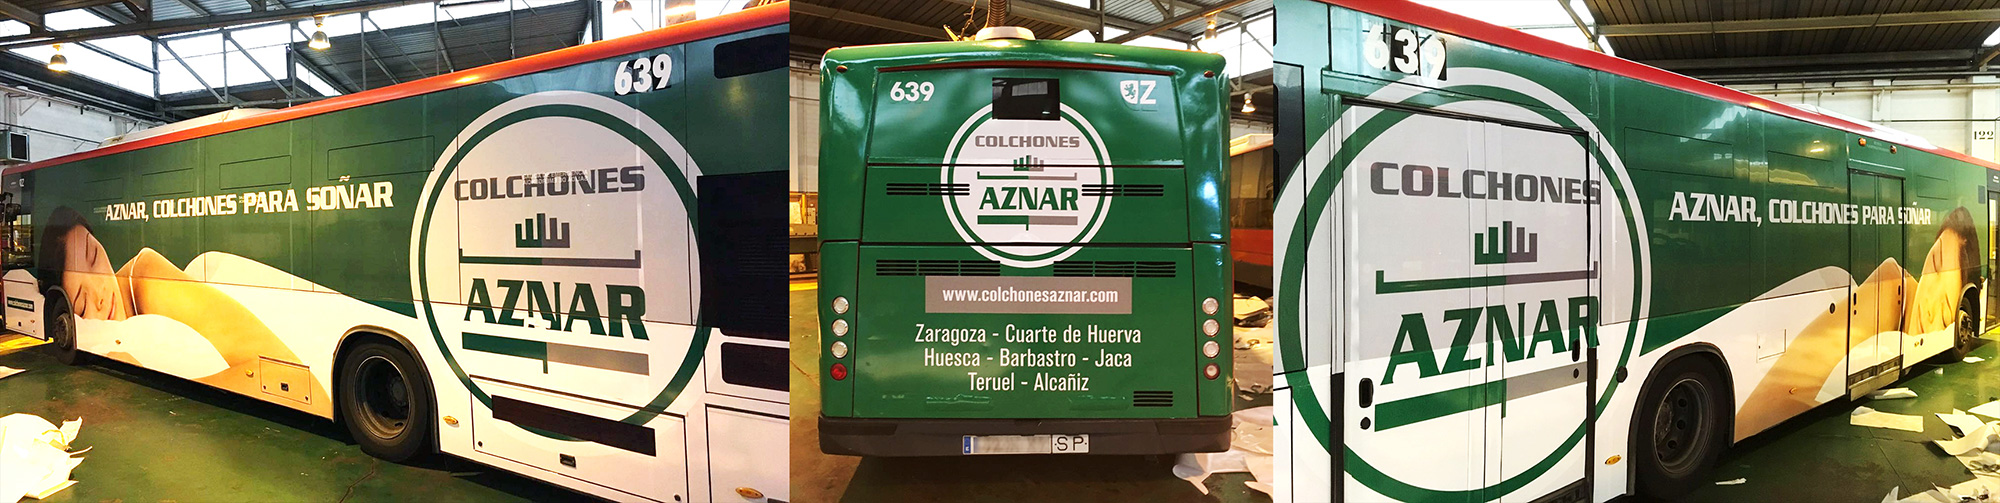 Autobús integral publicidad Zaragoza - Colchones Aznar